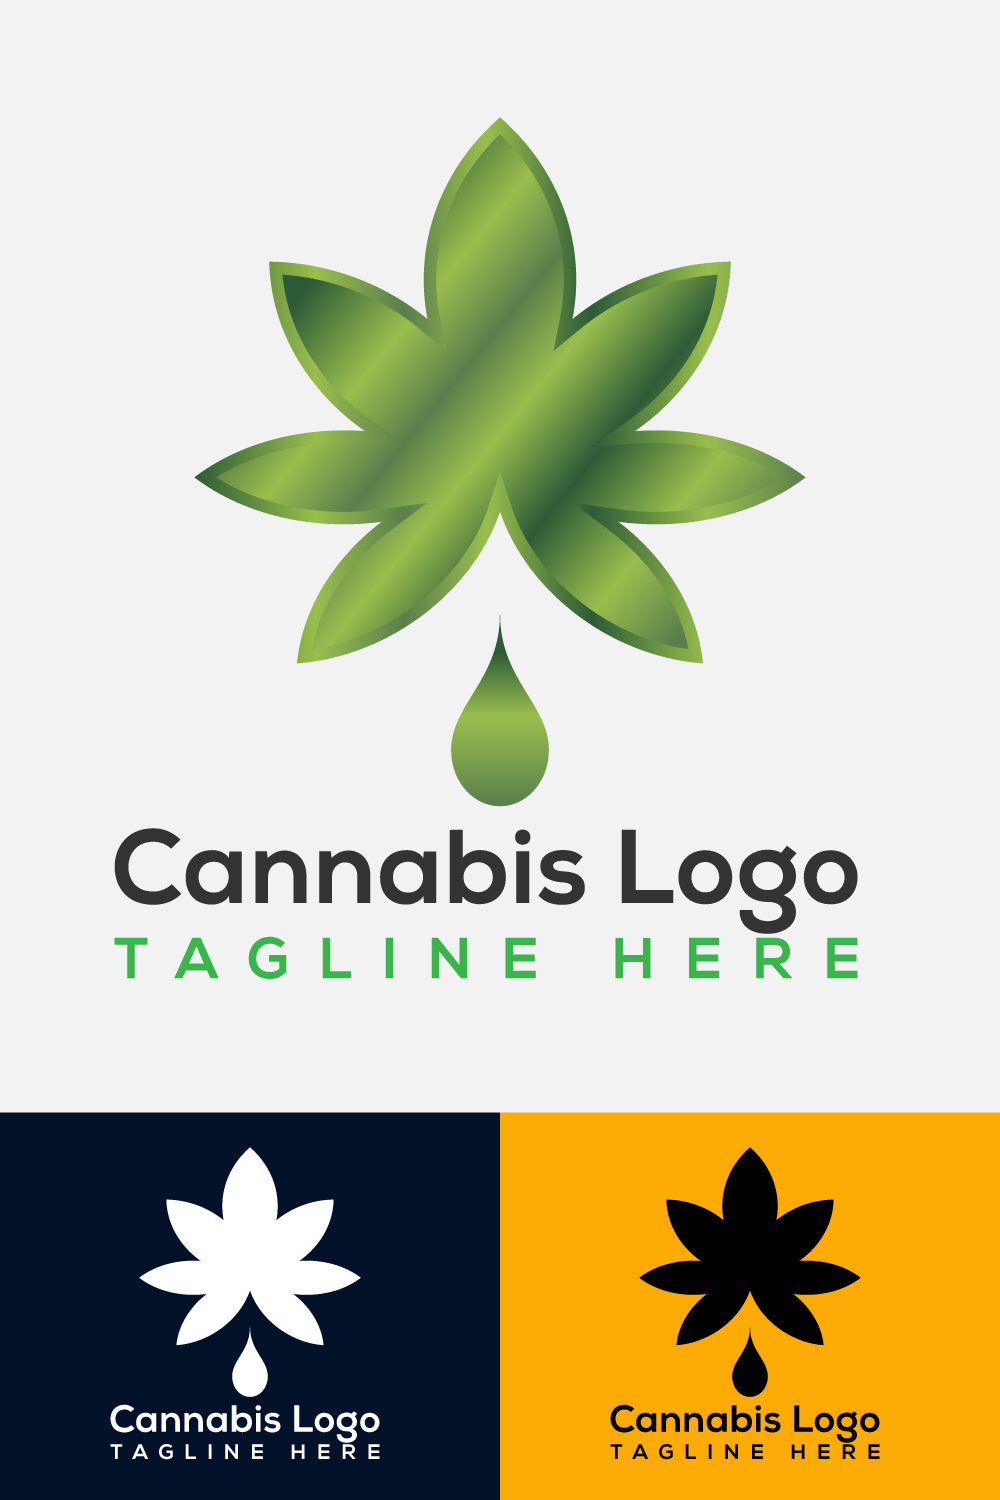 Marijuana Vector Logo Design Template Pinterest image.